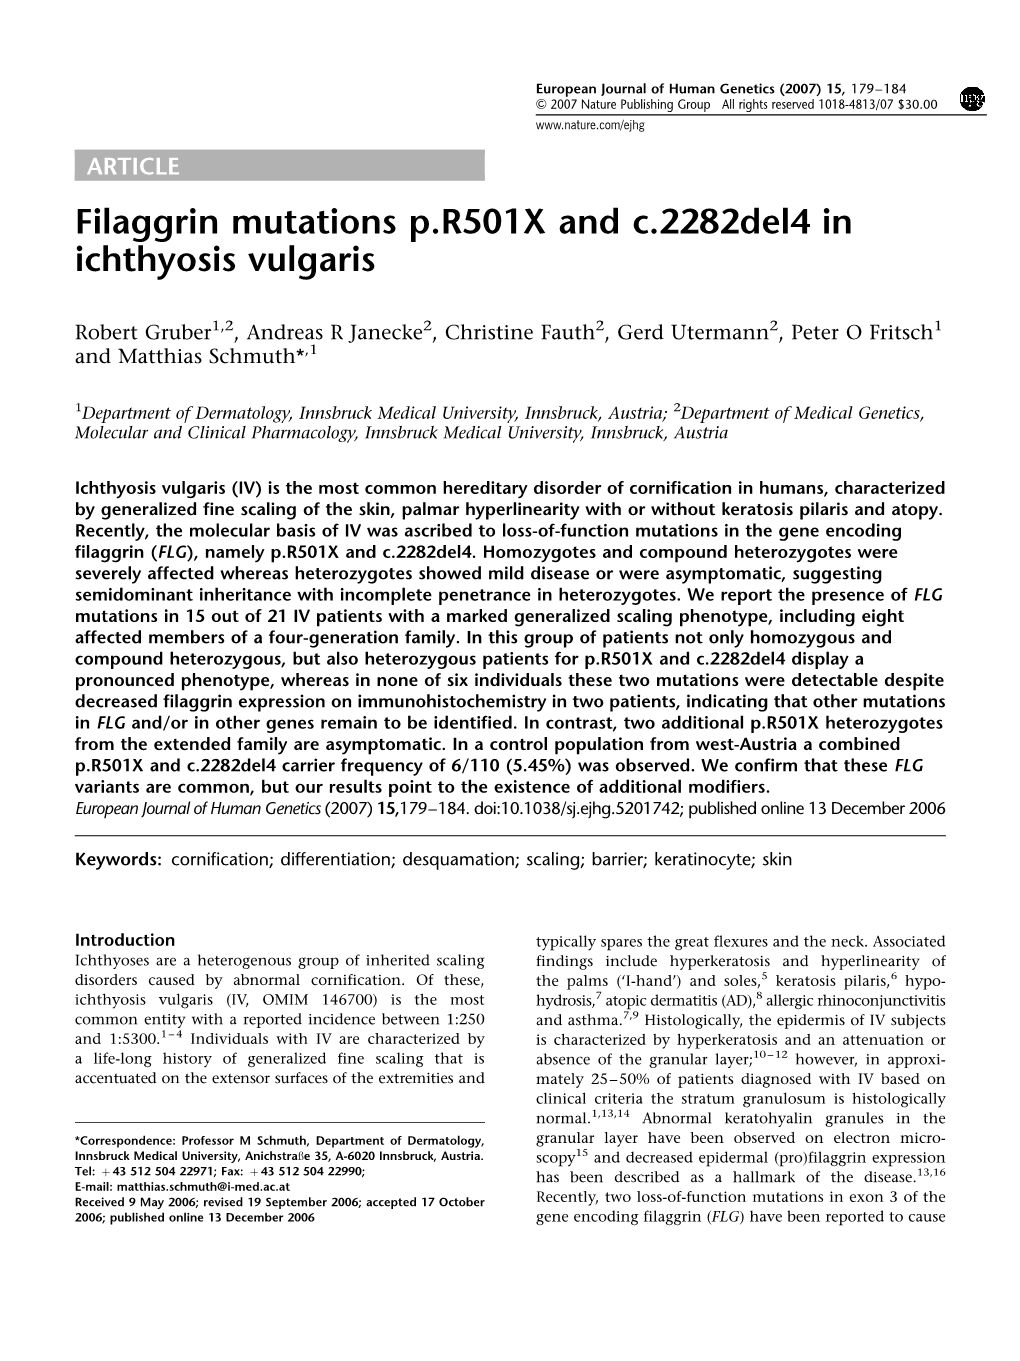 Filaggrin Mutations P.R501X and C.2282Del4 in Ichthyosis Vulgaris